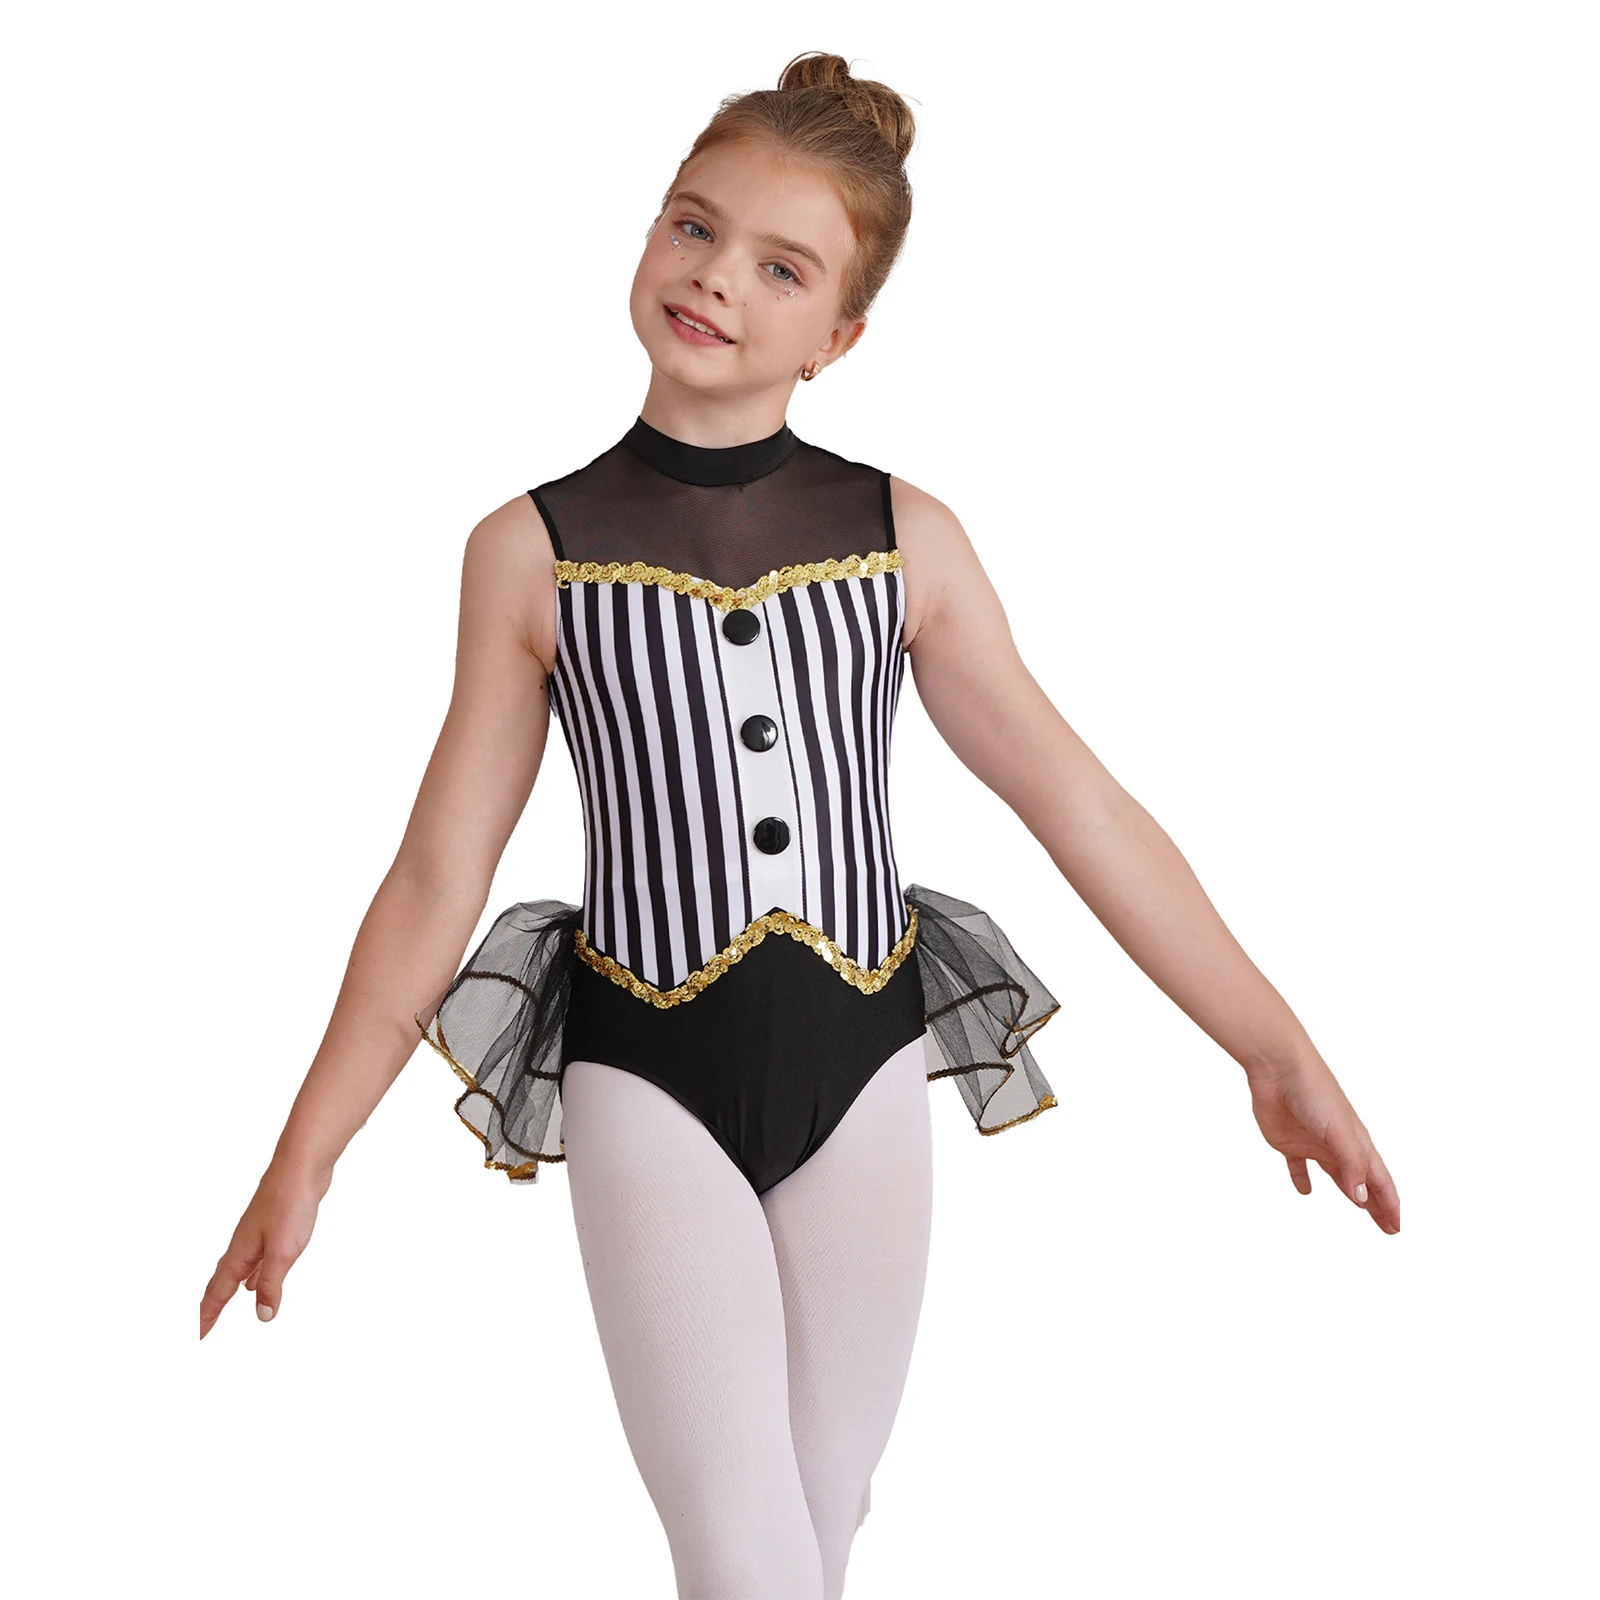 

Kids Girls Ballet Dance Halloween Performance Costume Sequins Open Back Striped Leotard with Tutu Tulle Skirted Bodysuit